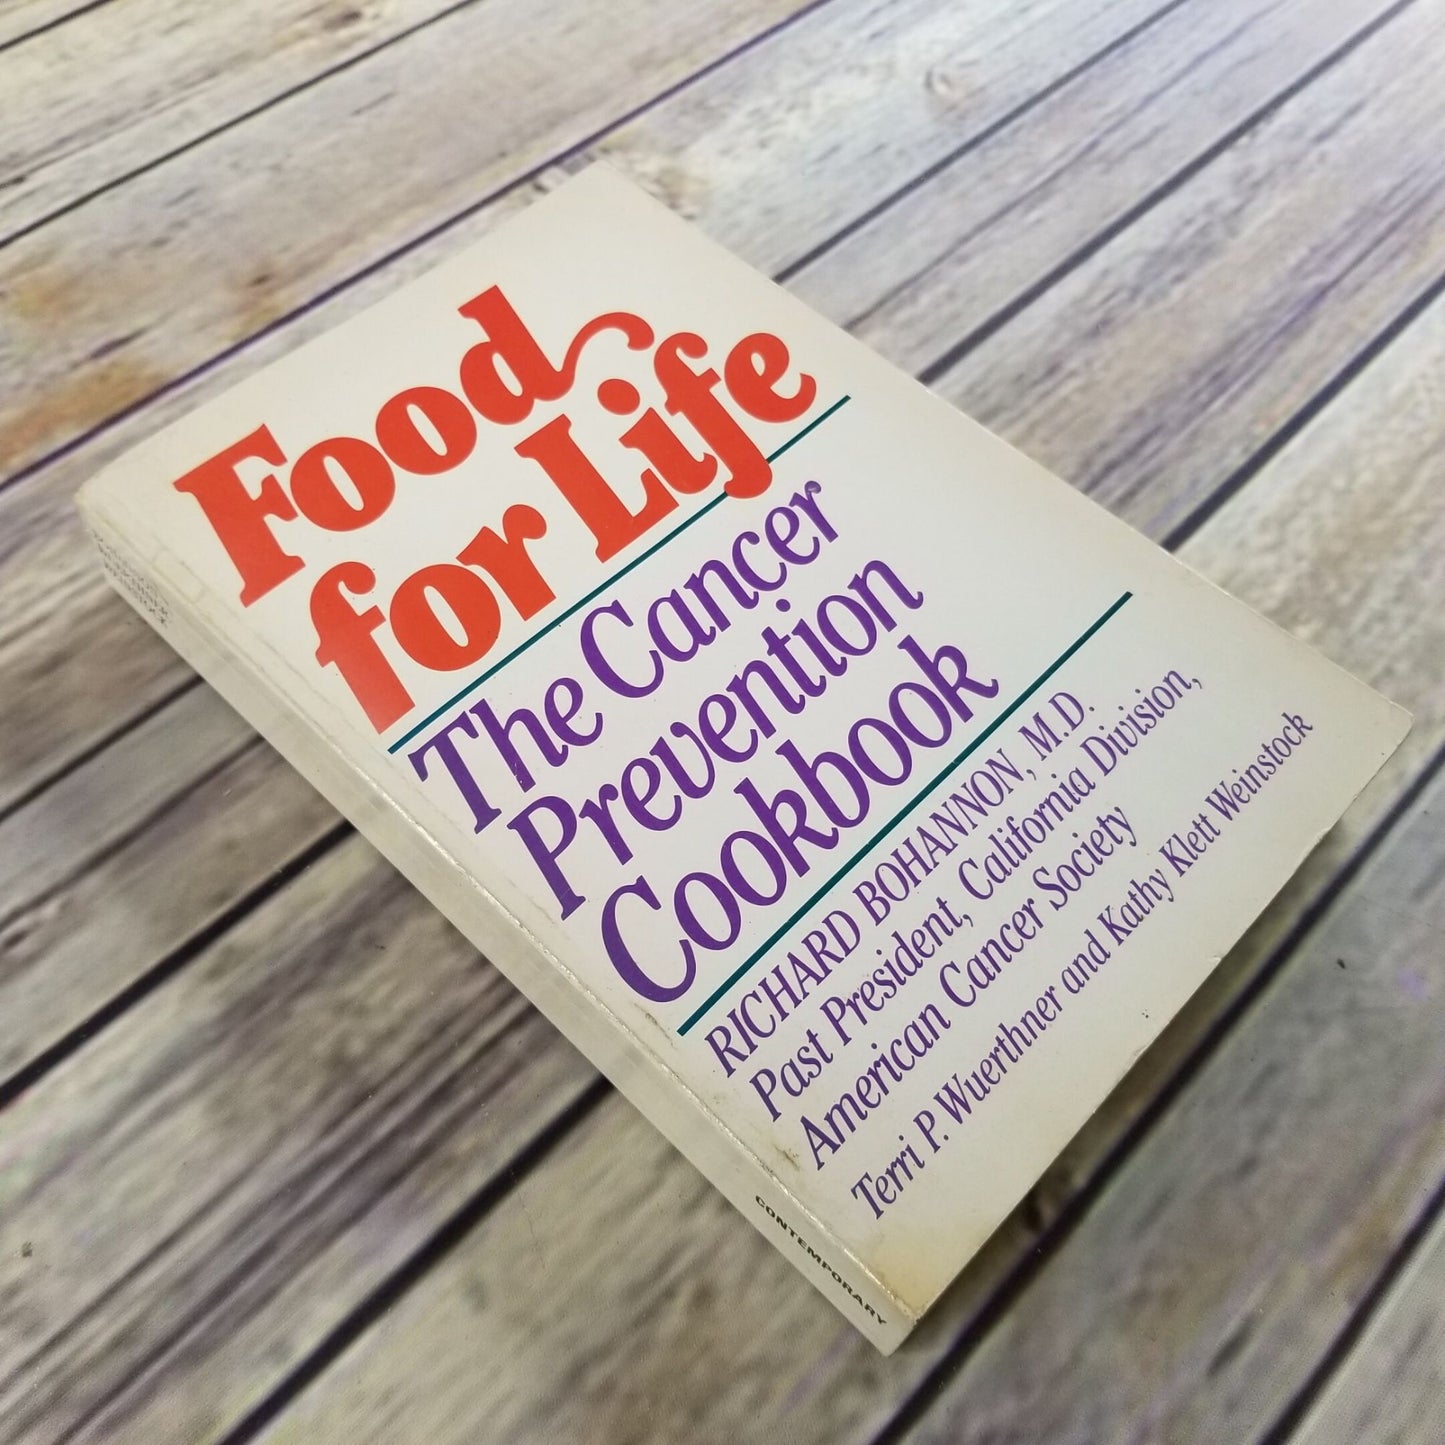 Vintage Cook Book Food For Life The Cancer Prevention Cookbook Recipes 1986 Paperback Richard Bohannon MD